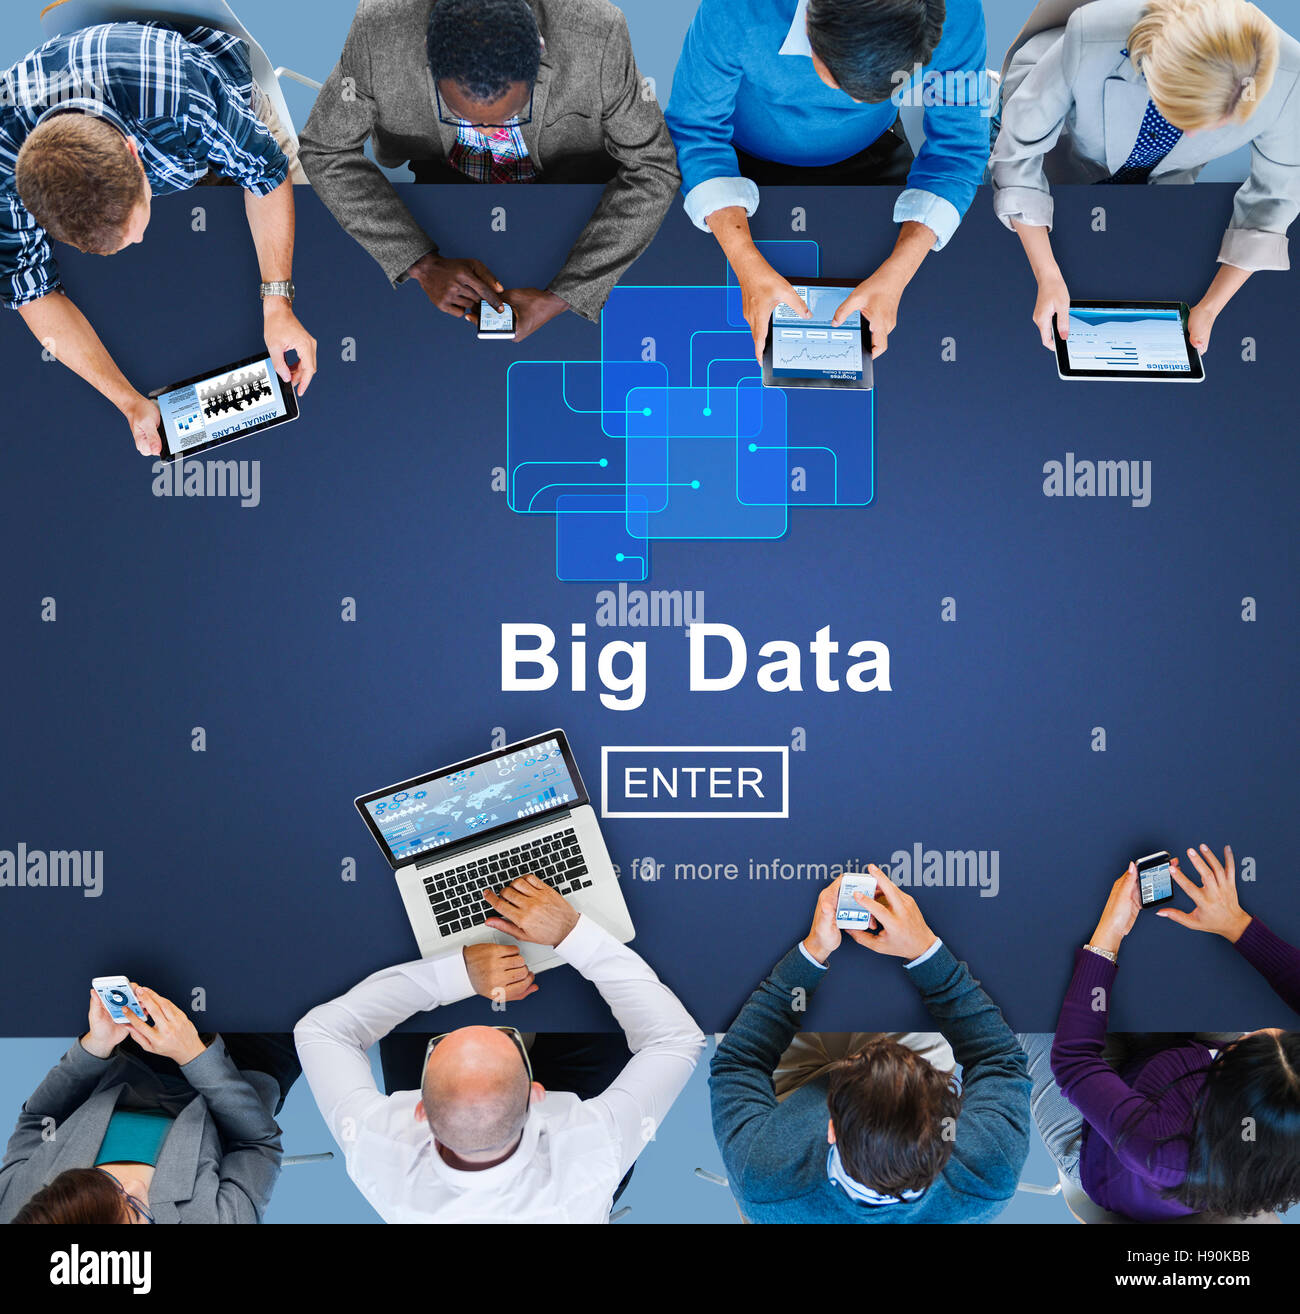 Big Data Information Technology Server Cloud Concept Stock Photo